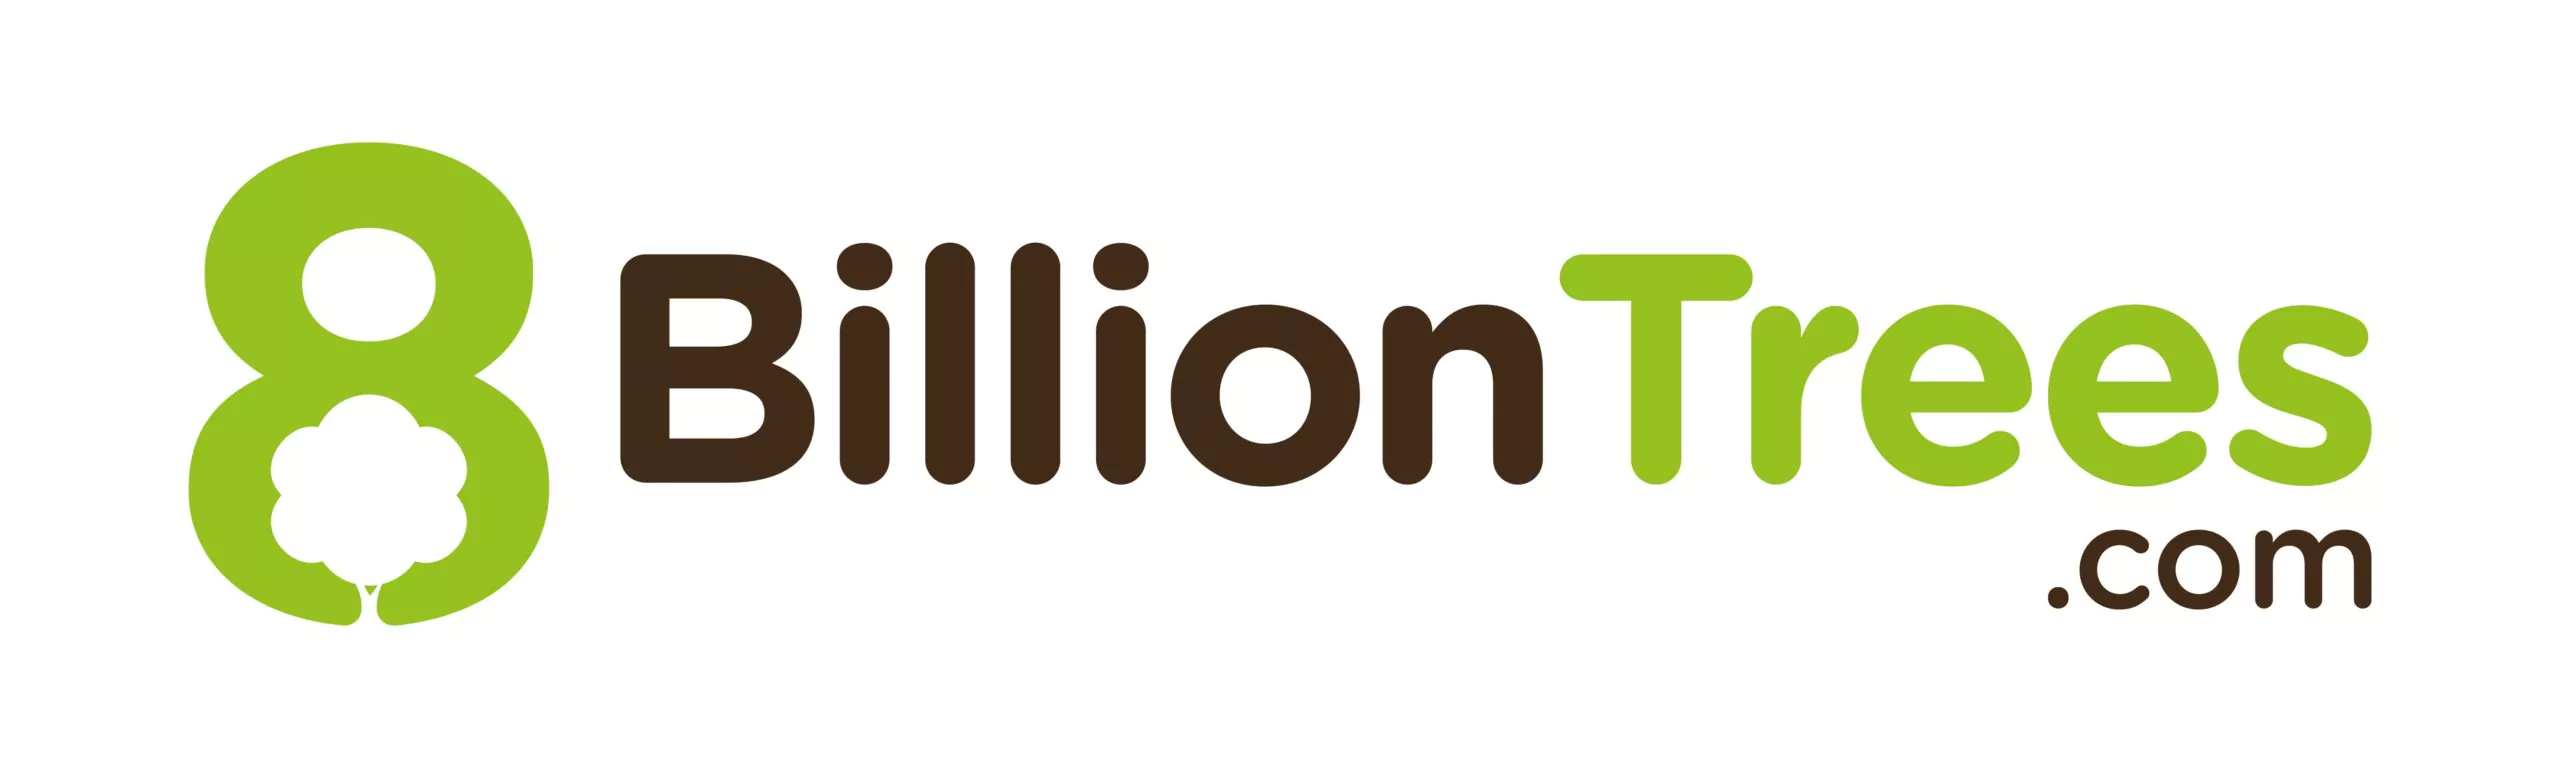 8 billion trees